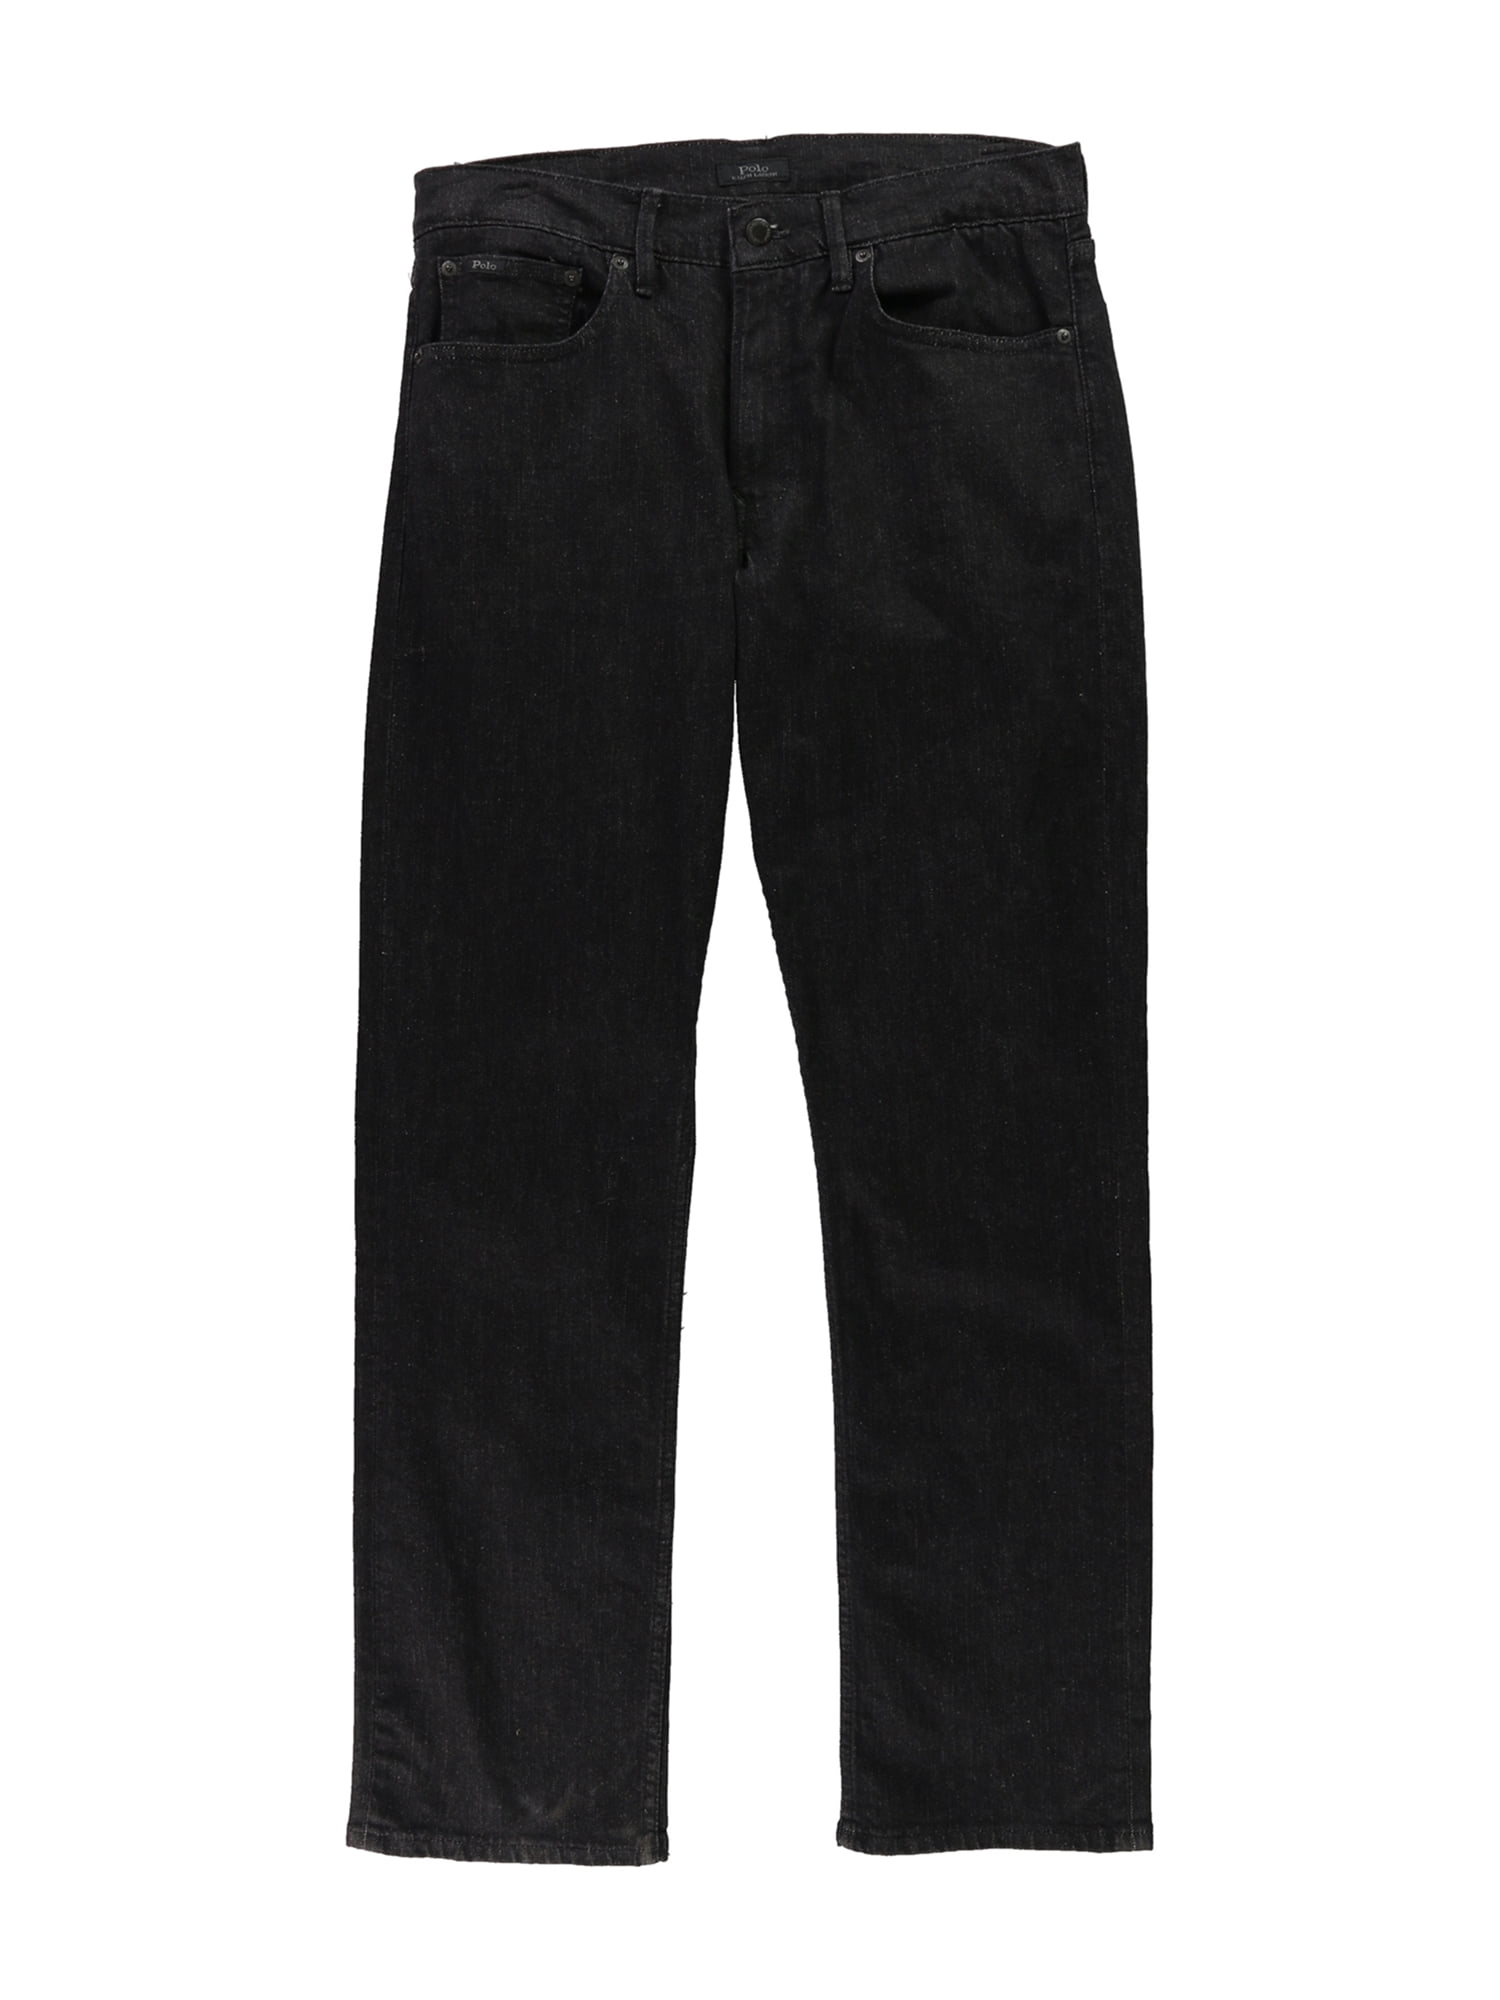 Ralph Lauren Mens Prospect Straight Leg Jeans black 34x30 | Walmart Canada